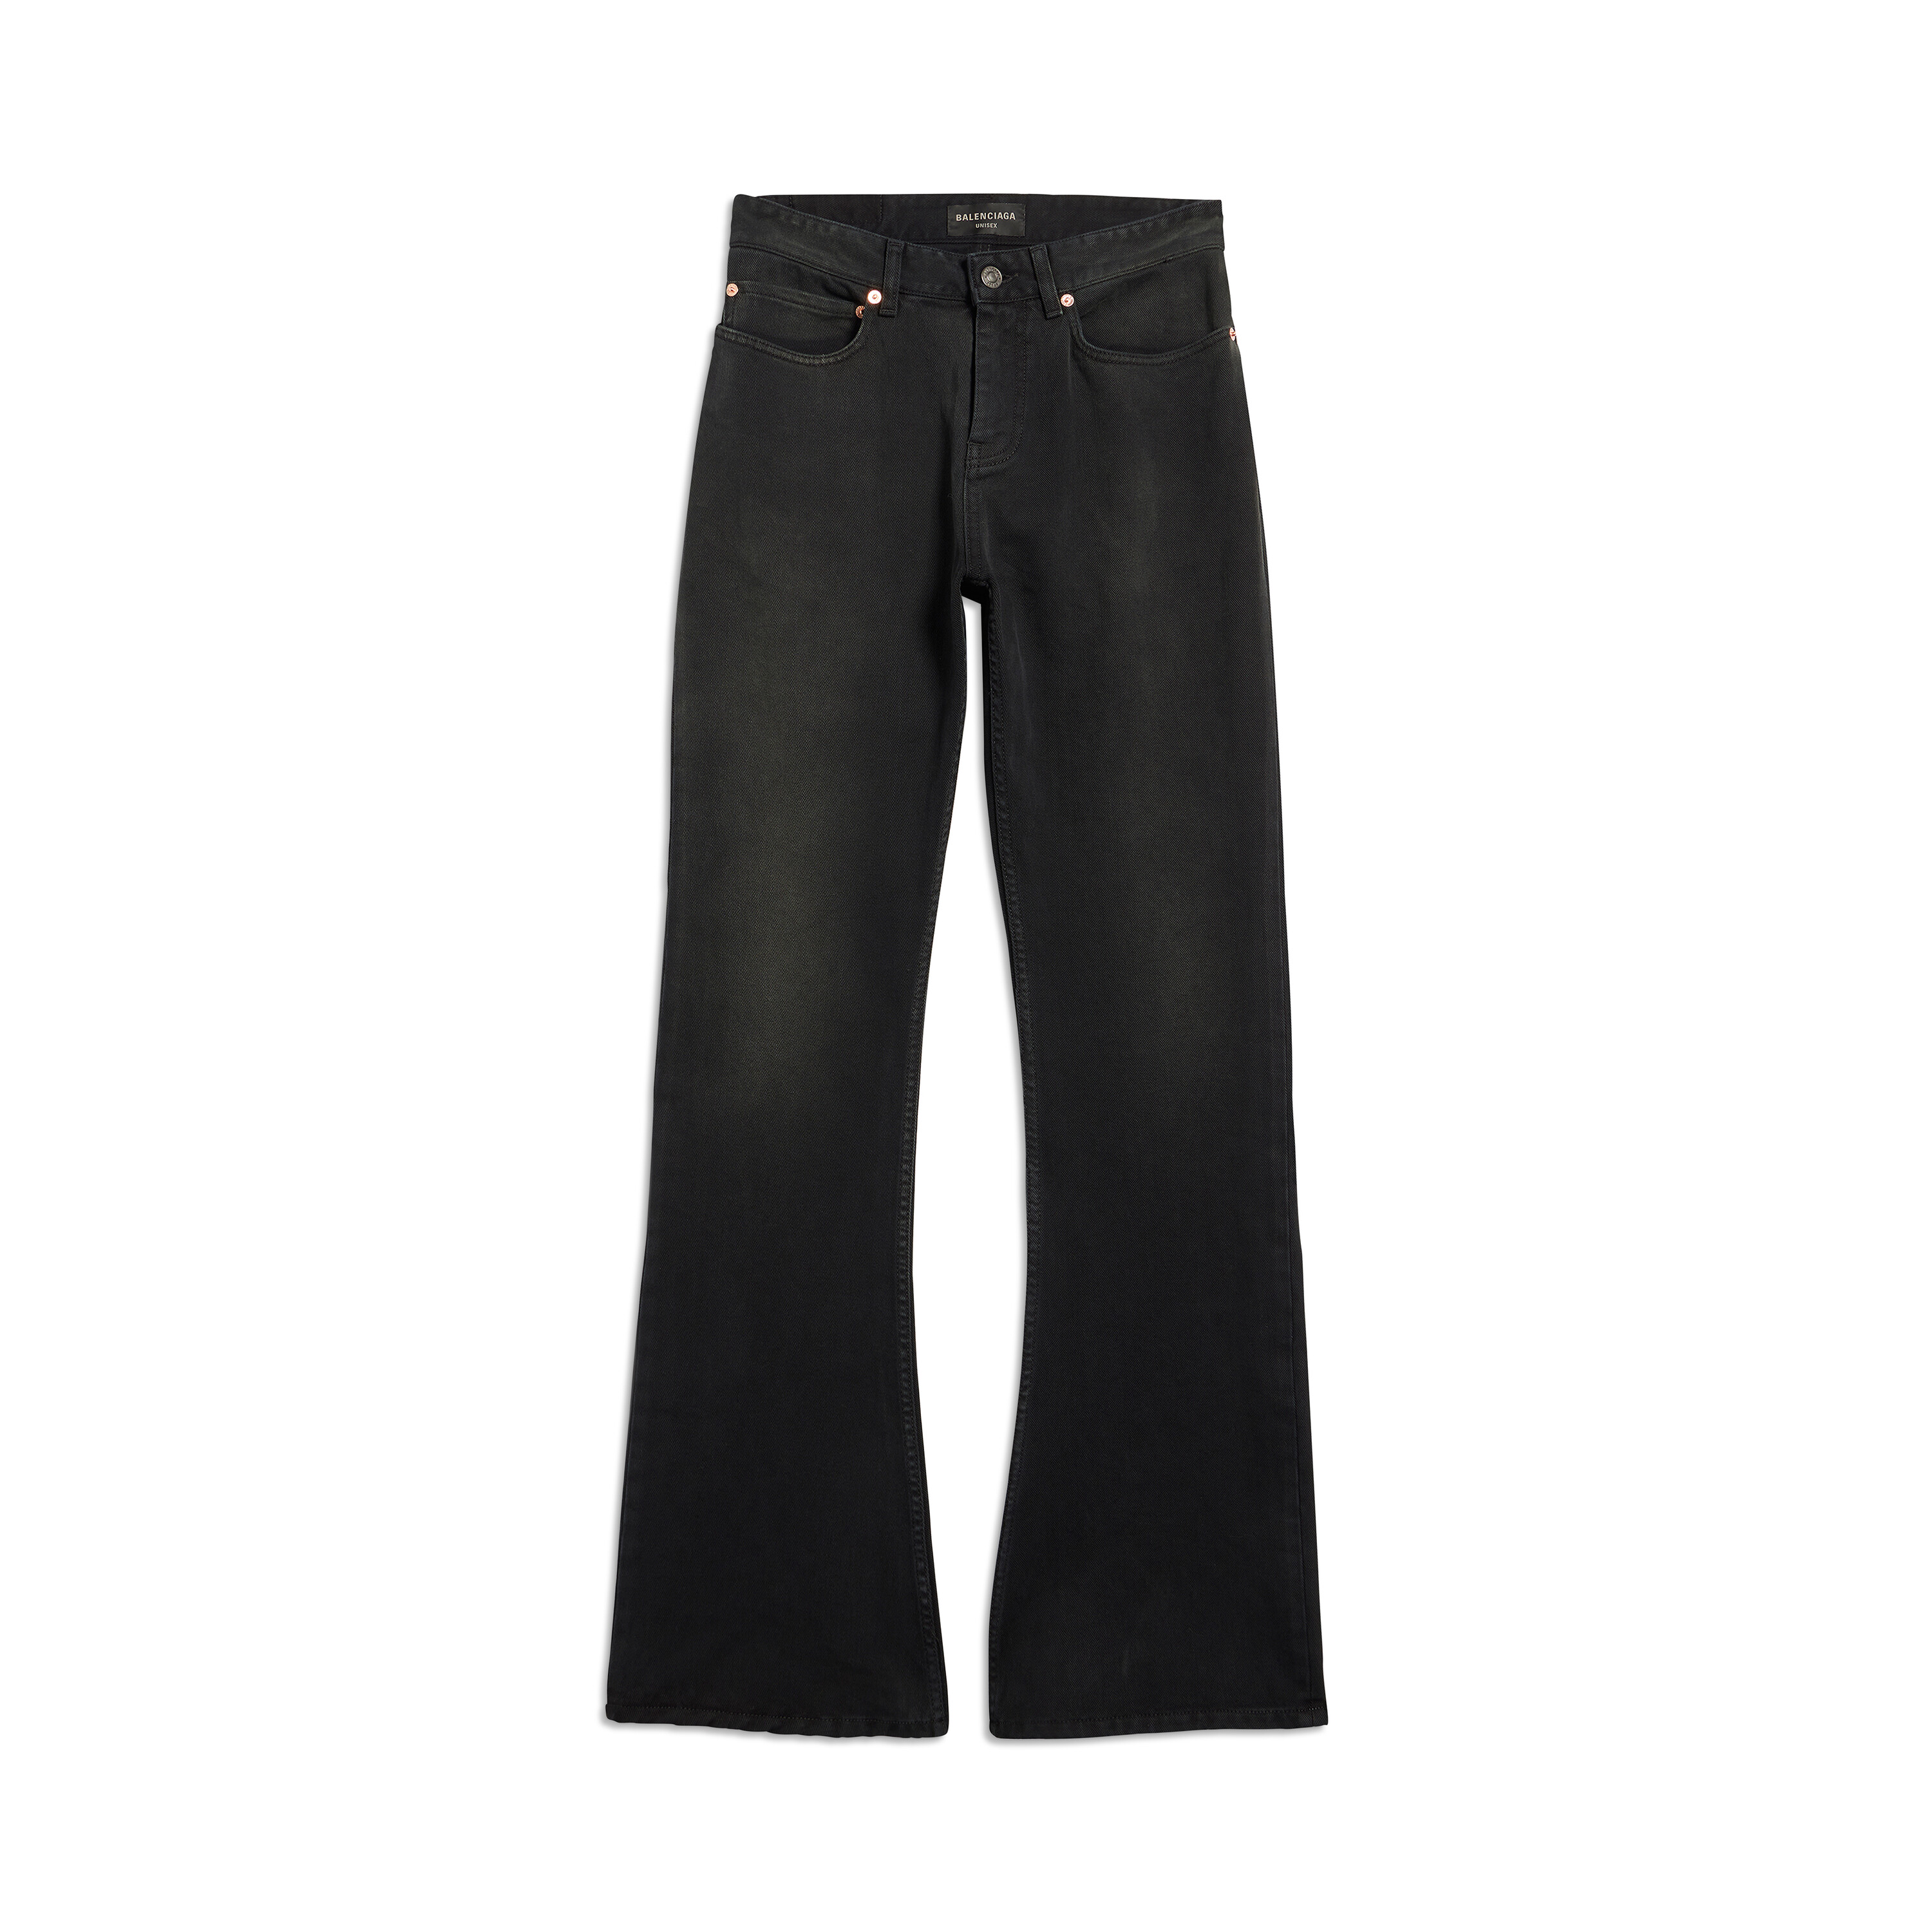 Black Jeans with logo Givenchy - Vitkac Canada